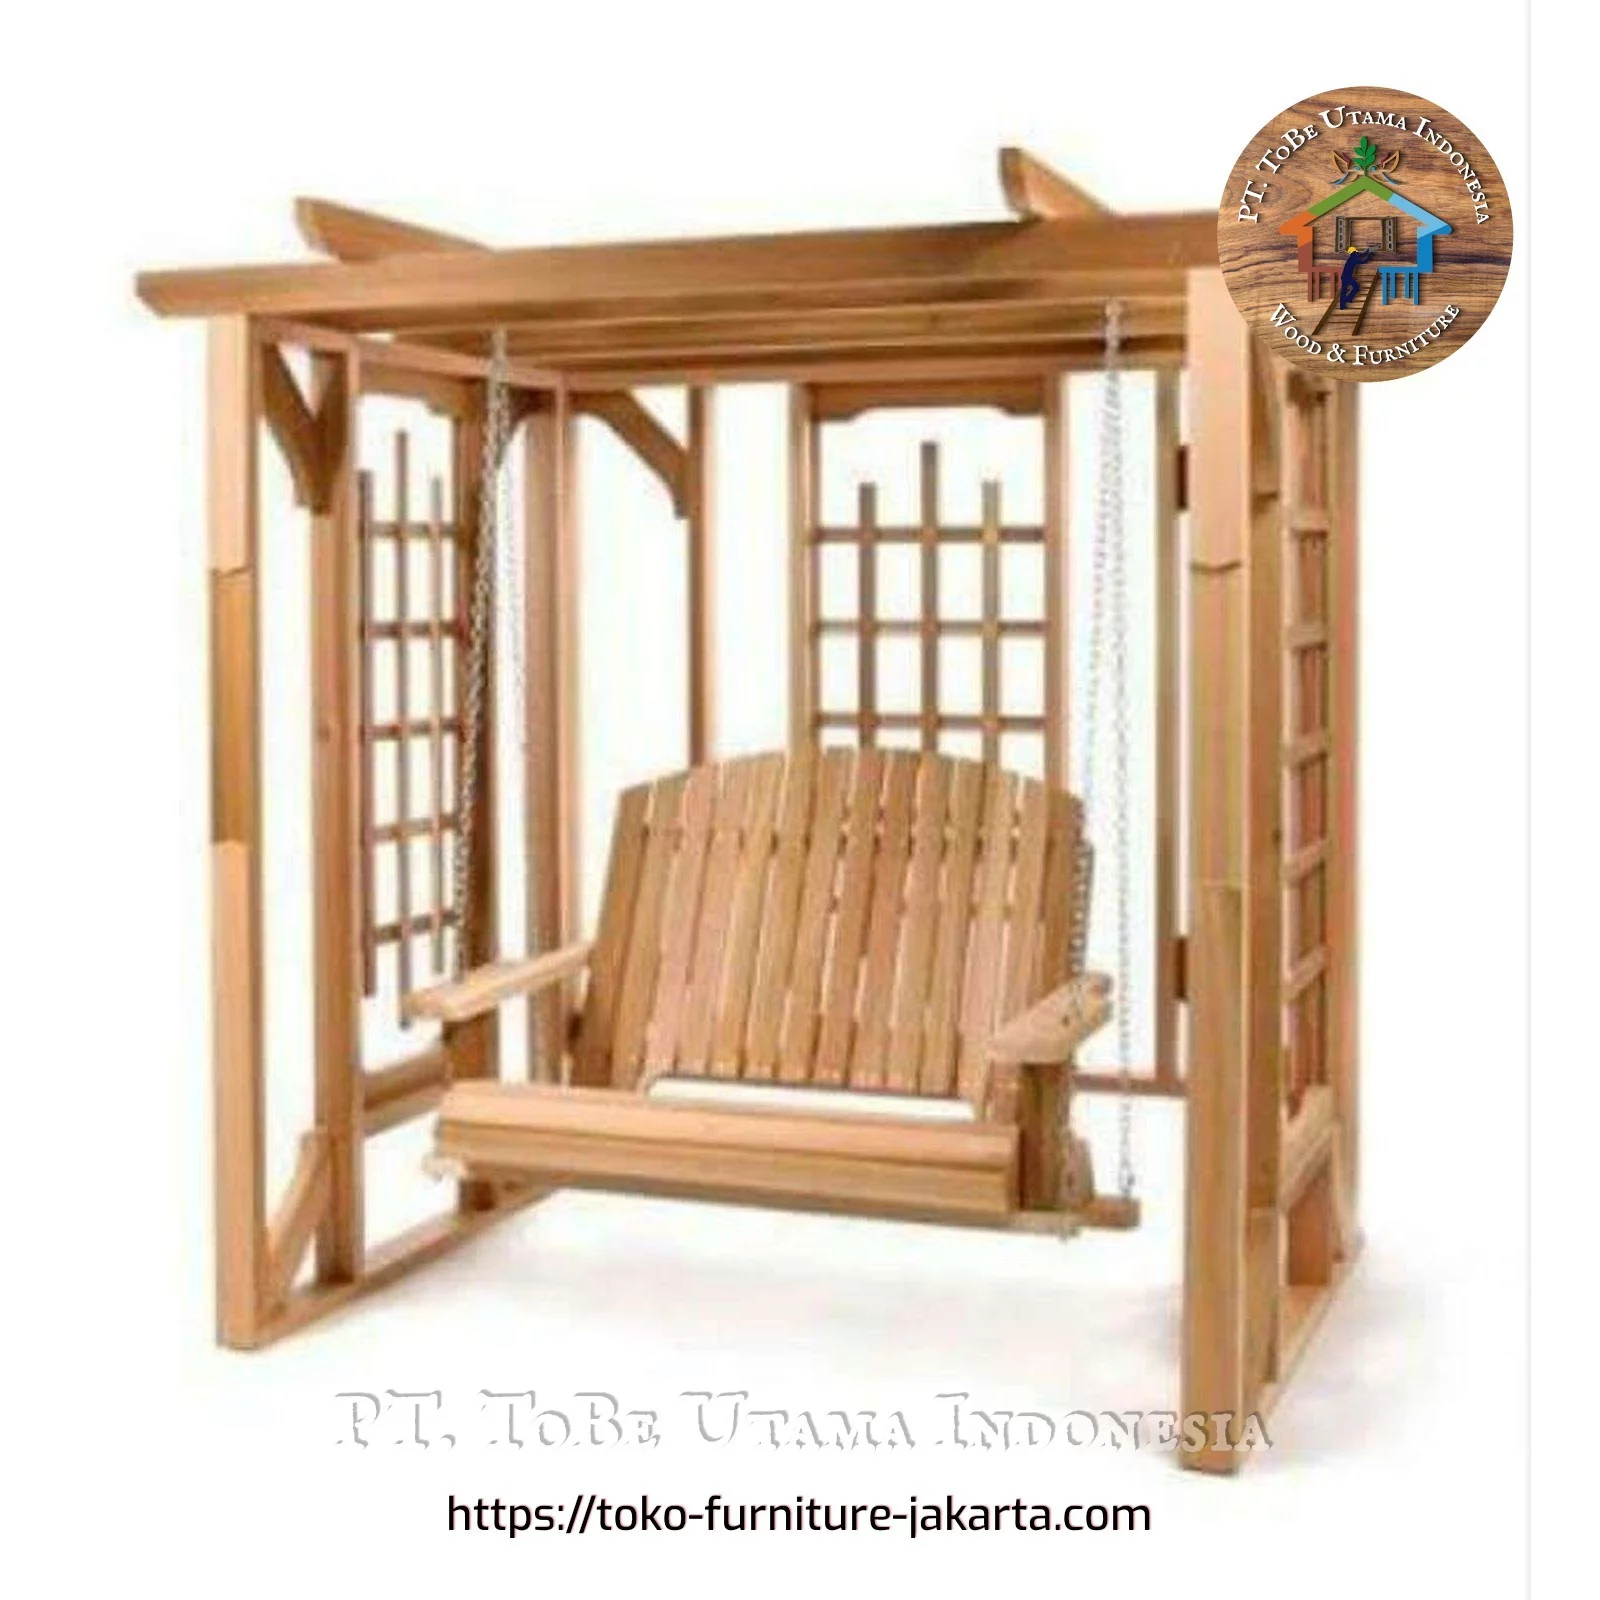 Garden - Swing: Swing Chair made of teakwood (image 1 of 1).